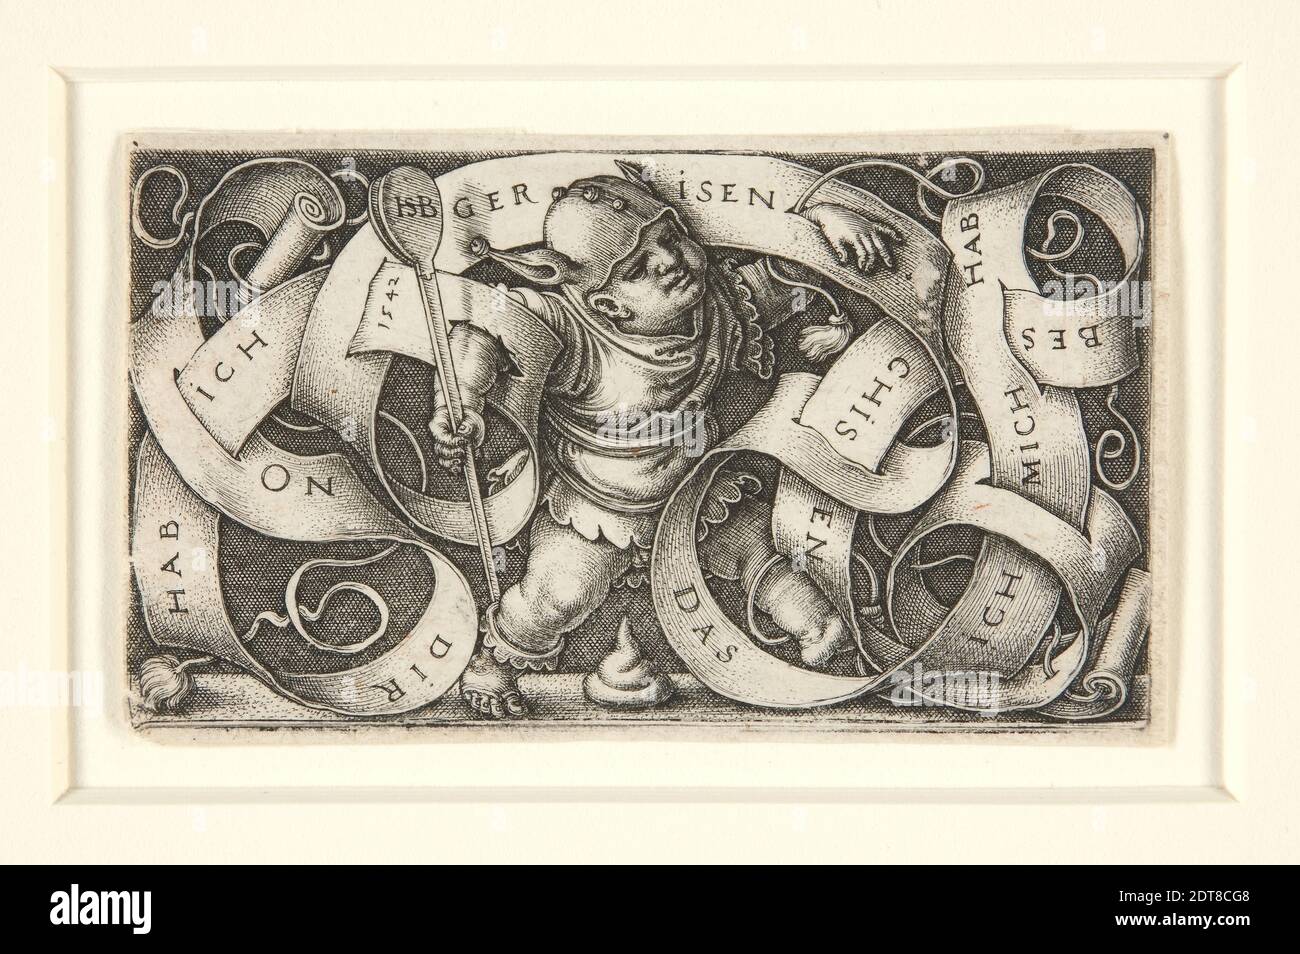 Artista: Hans Sebald Beham, alemán, 1500–1550, der Kleine Schalksnarr mit grossen Schrift Band (The Little Bufpoon), grabado, platemark: 4.8 × 8.2 cm (1 7/8 × 3 1/4 in.), fabricado en Alemania, alemán, siglo XVI, trabajos en papel - impresiones Foto de stock